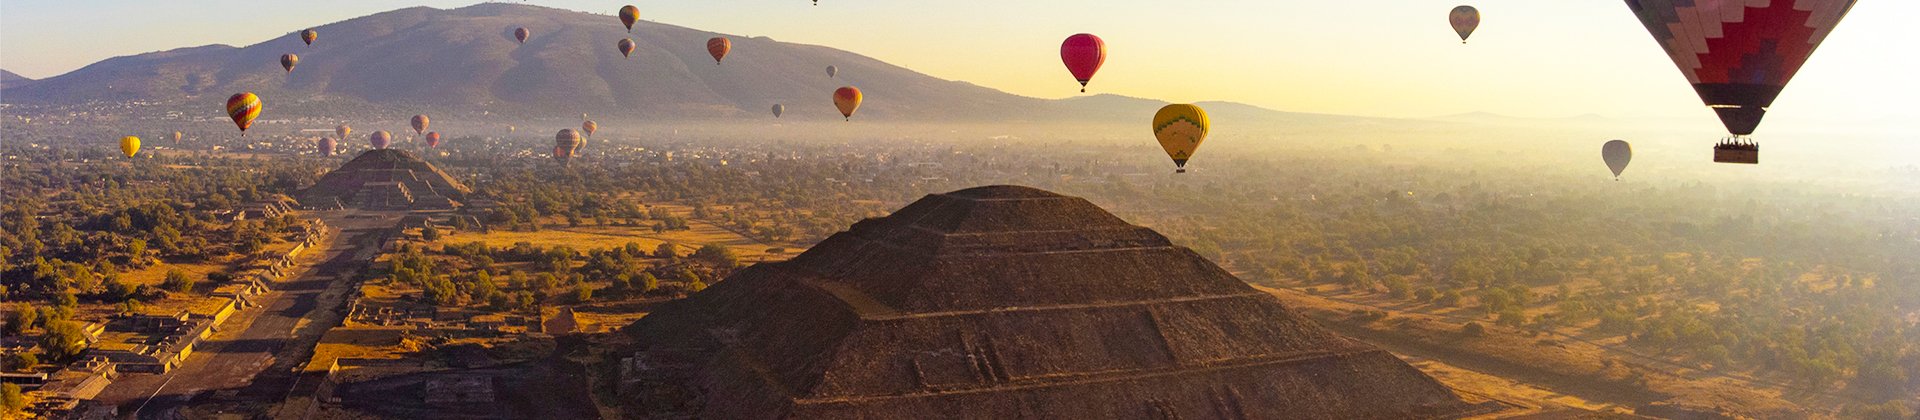 Teotihuacan sunset balloon ride